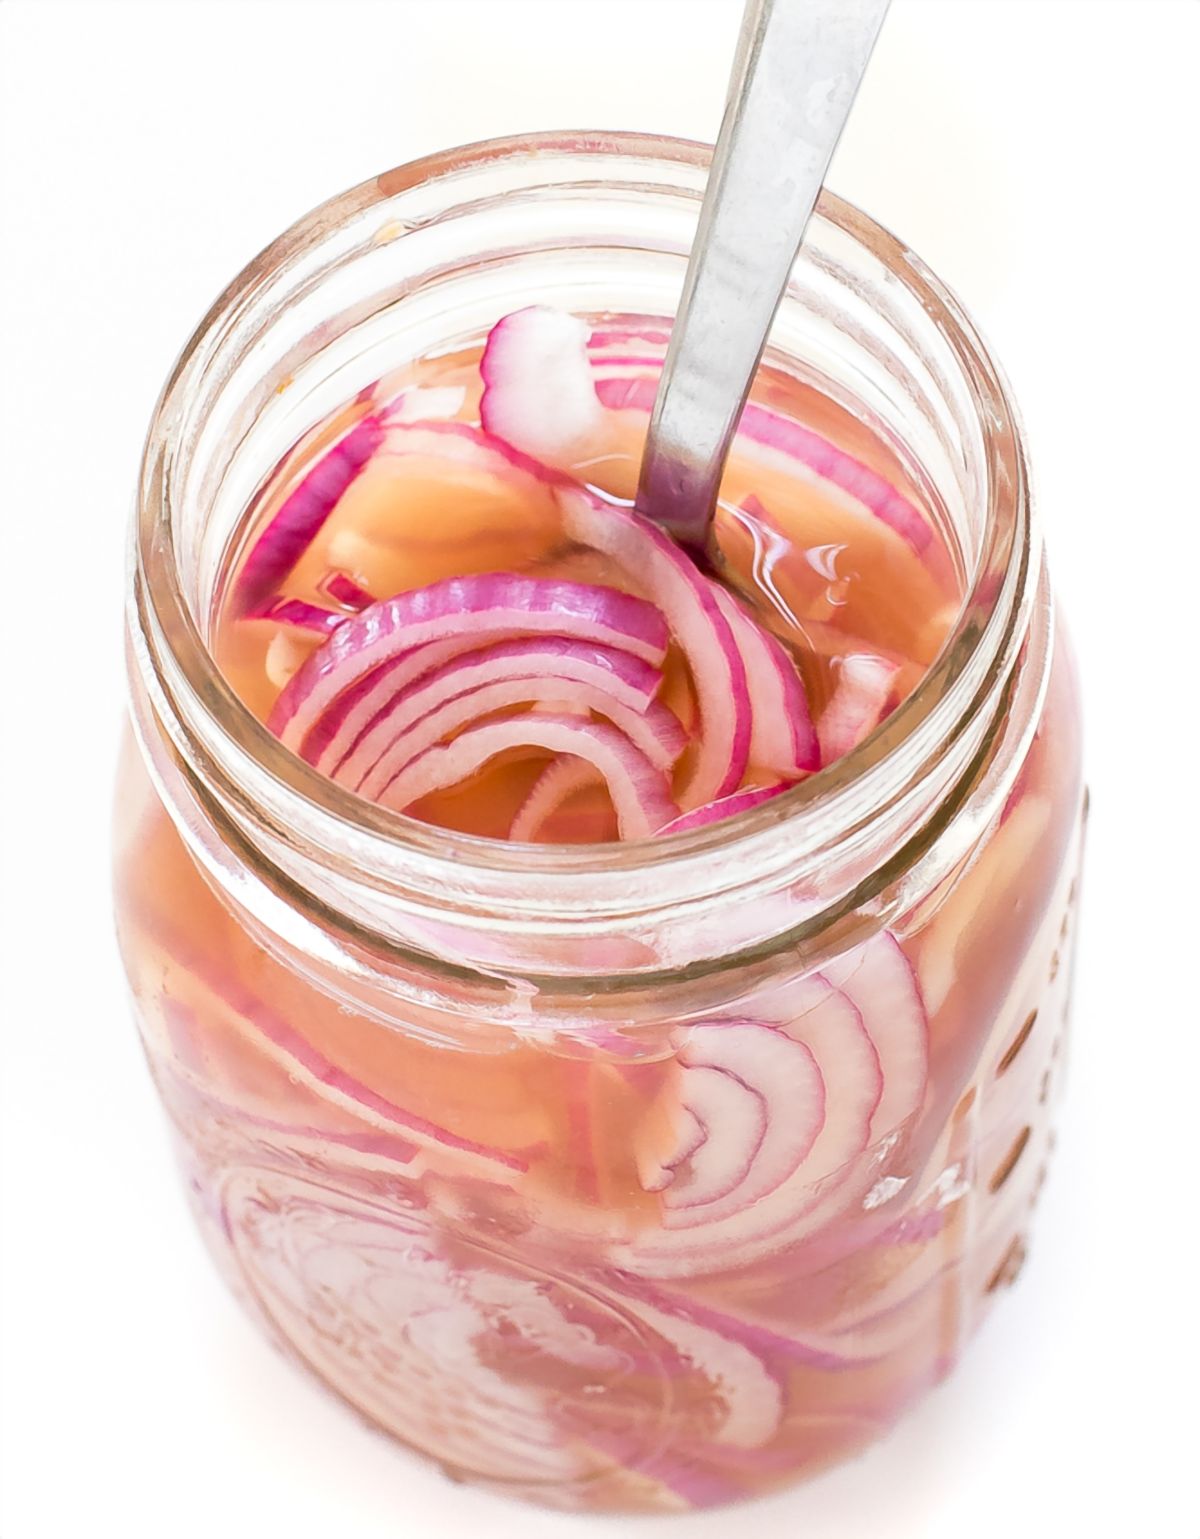 https://chefsavvy.com/wp-content/uploads/homemade-pickled-onions.jpg